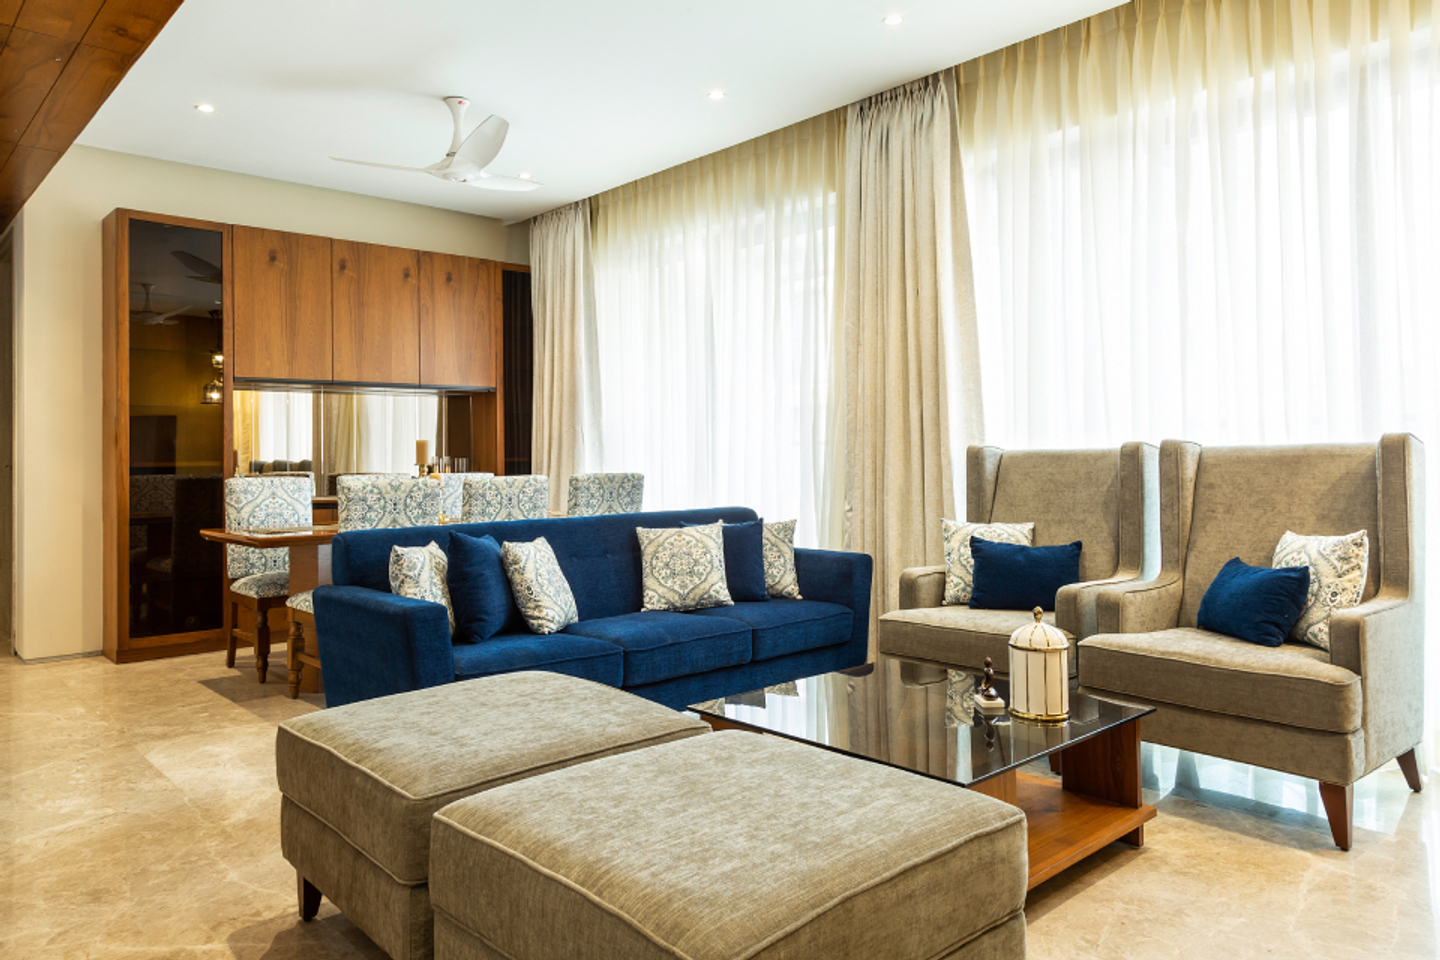 Contemporary Living Room Design With A Spacious Crockery Unit